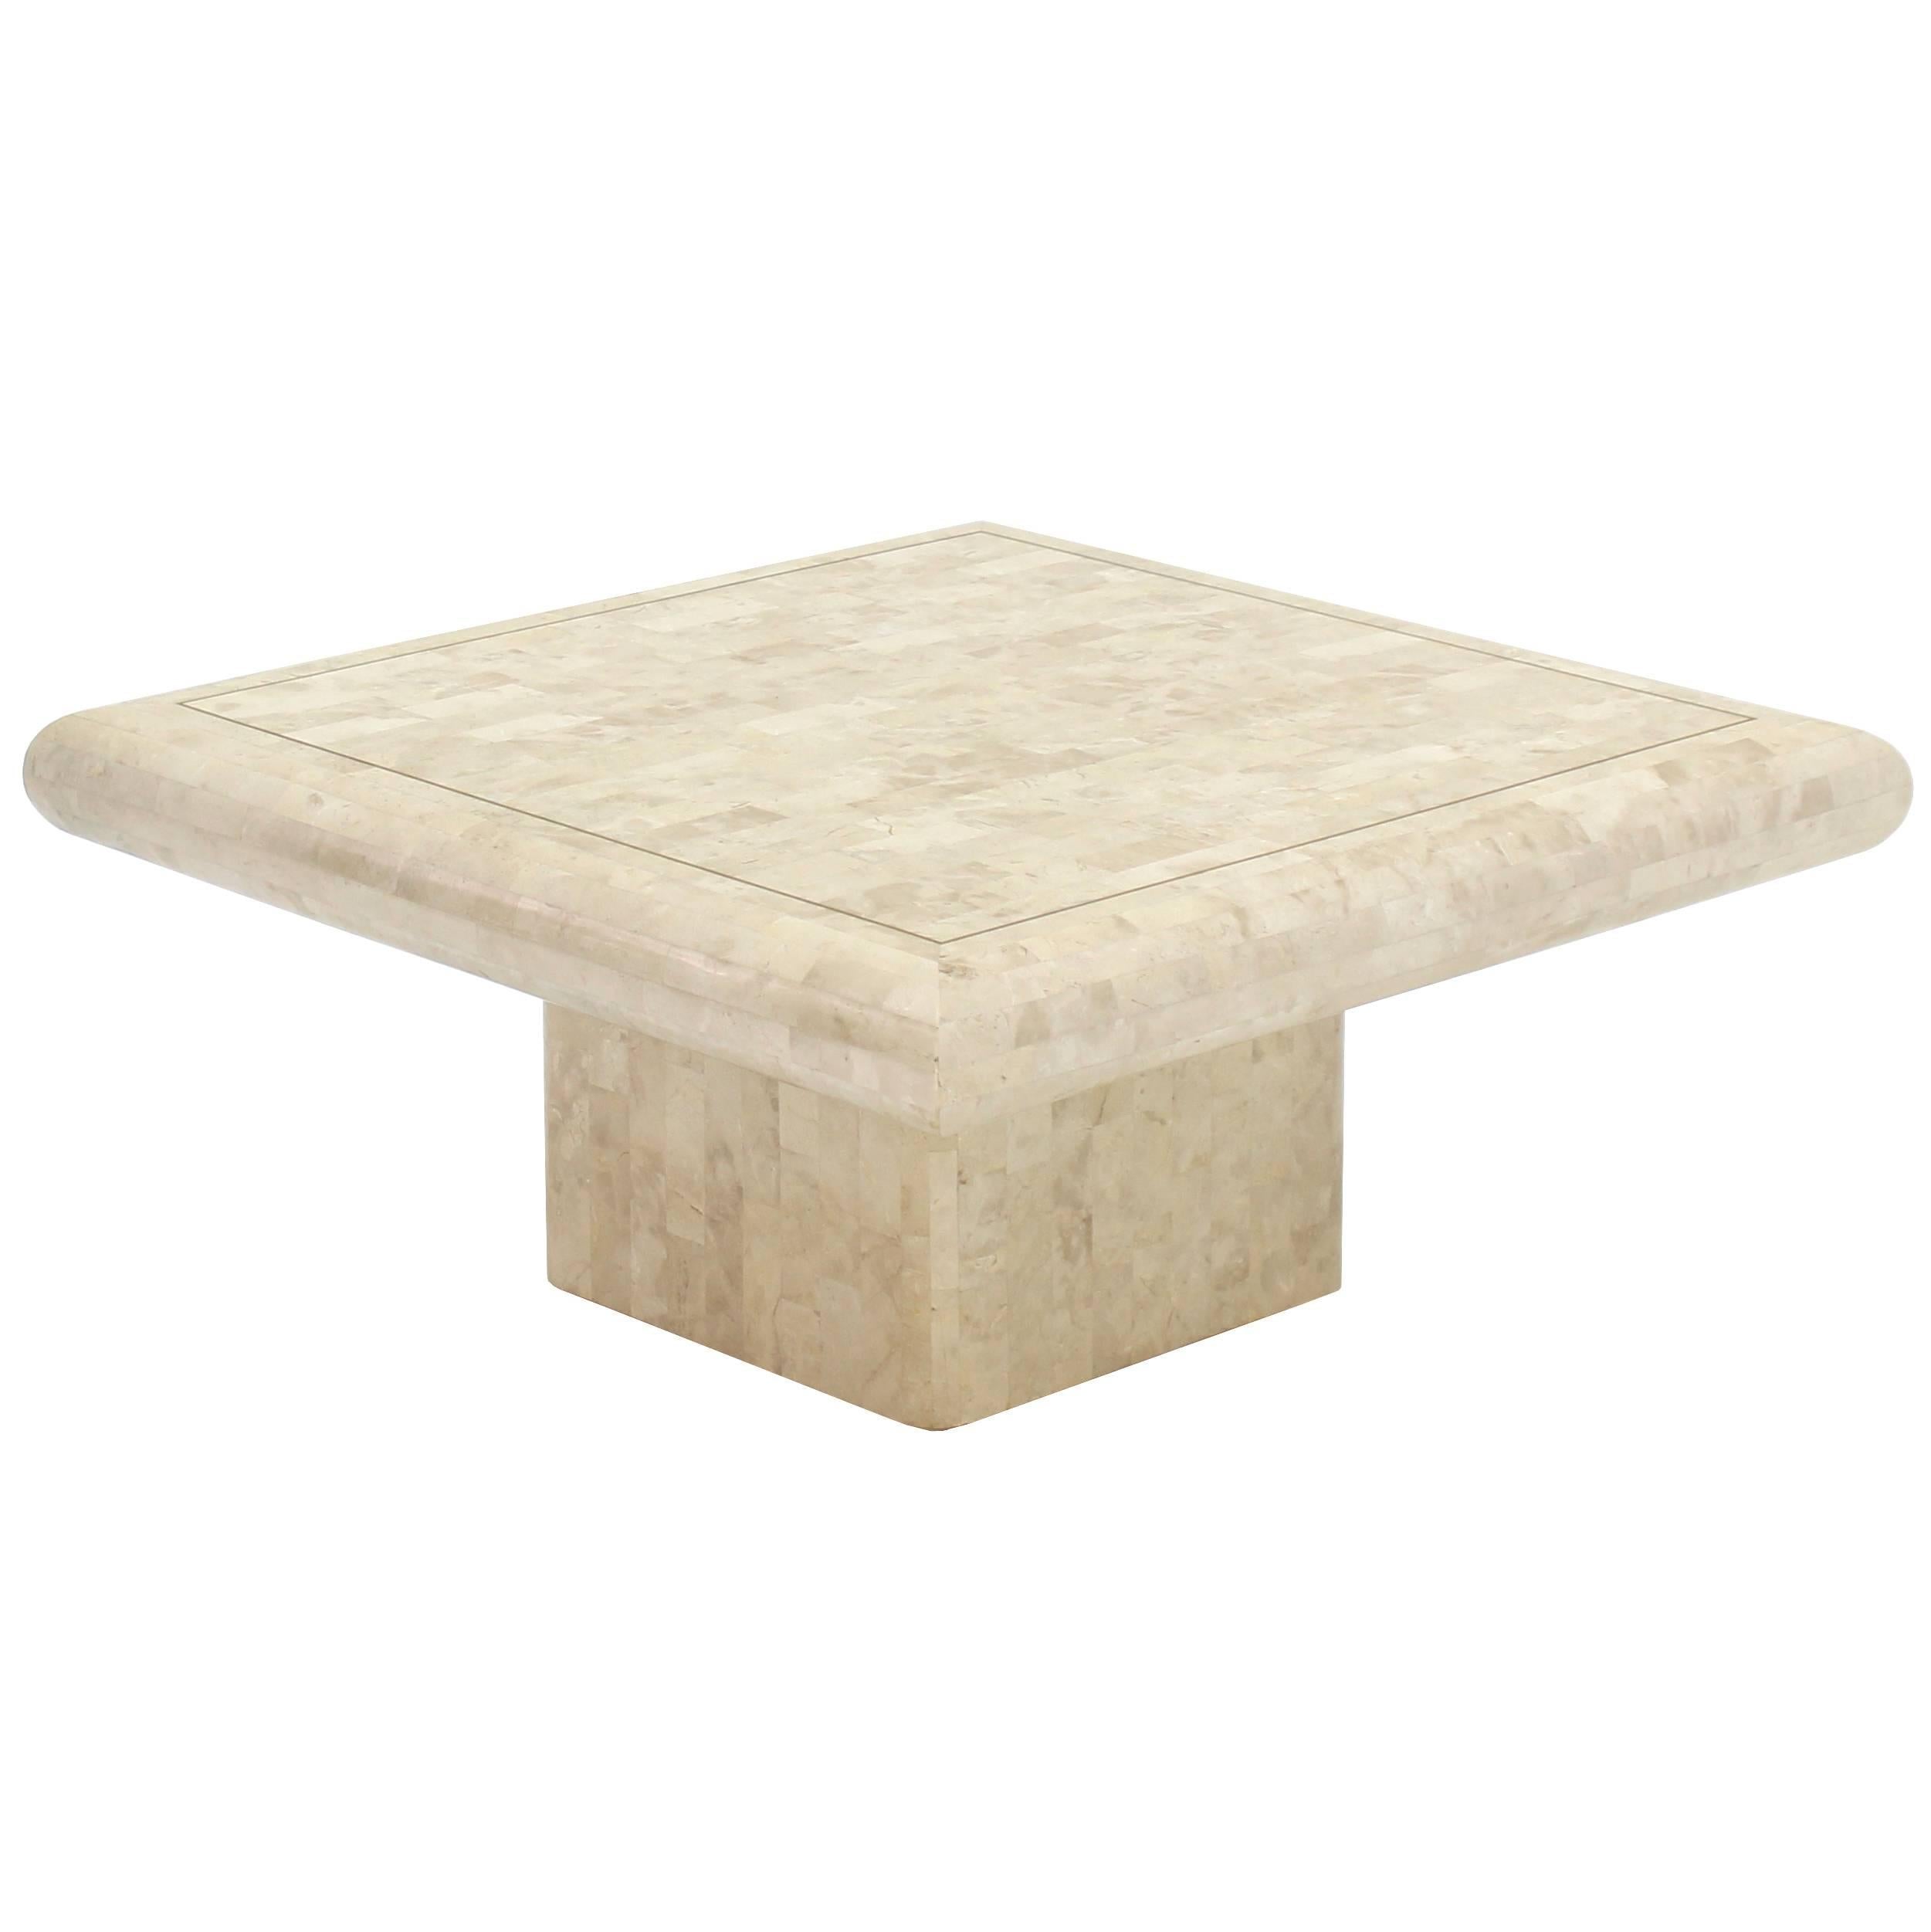 Tessellated Stone Tile Coffee Table